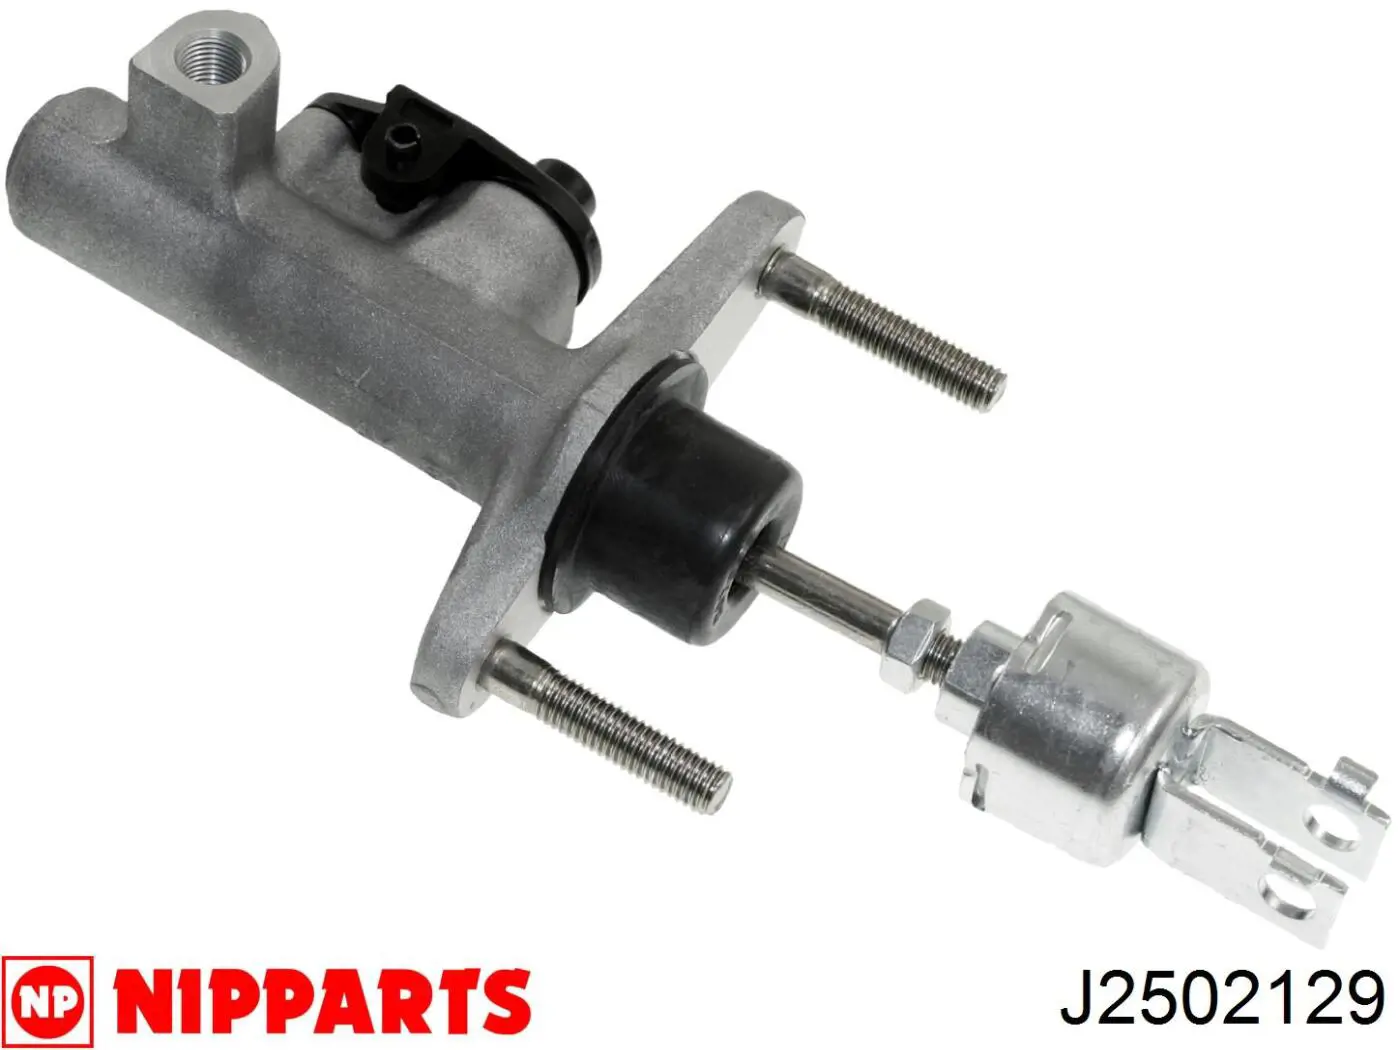 J2502129 Nipparts cilindro maestro de embrague